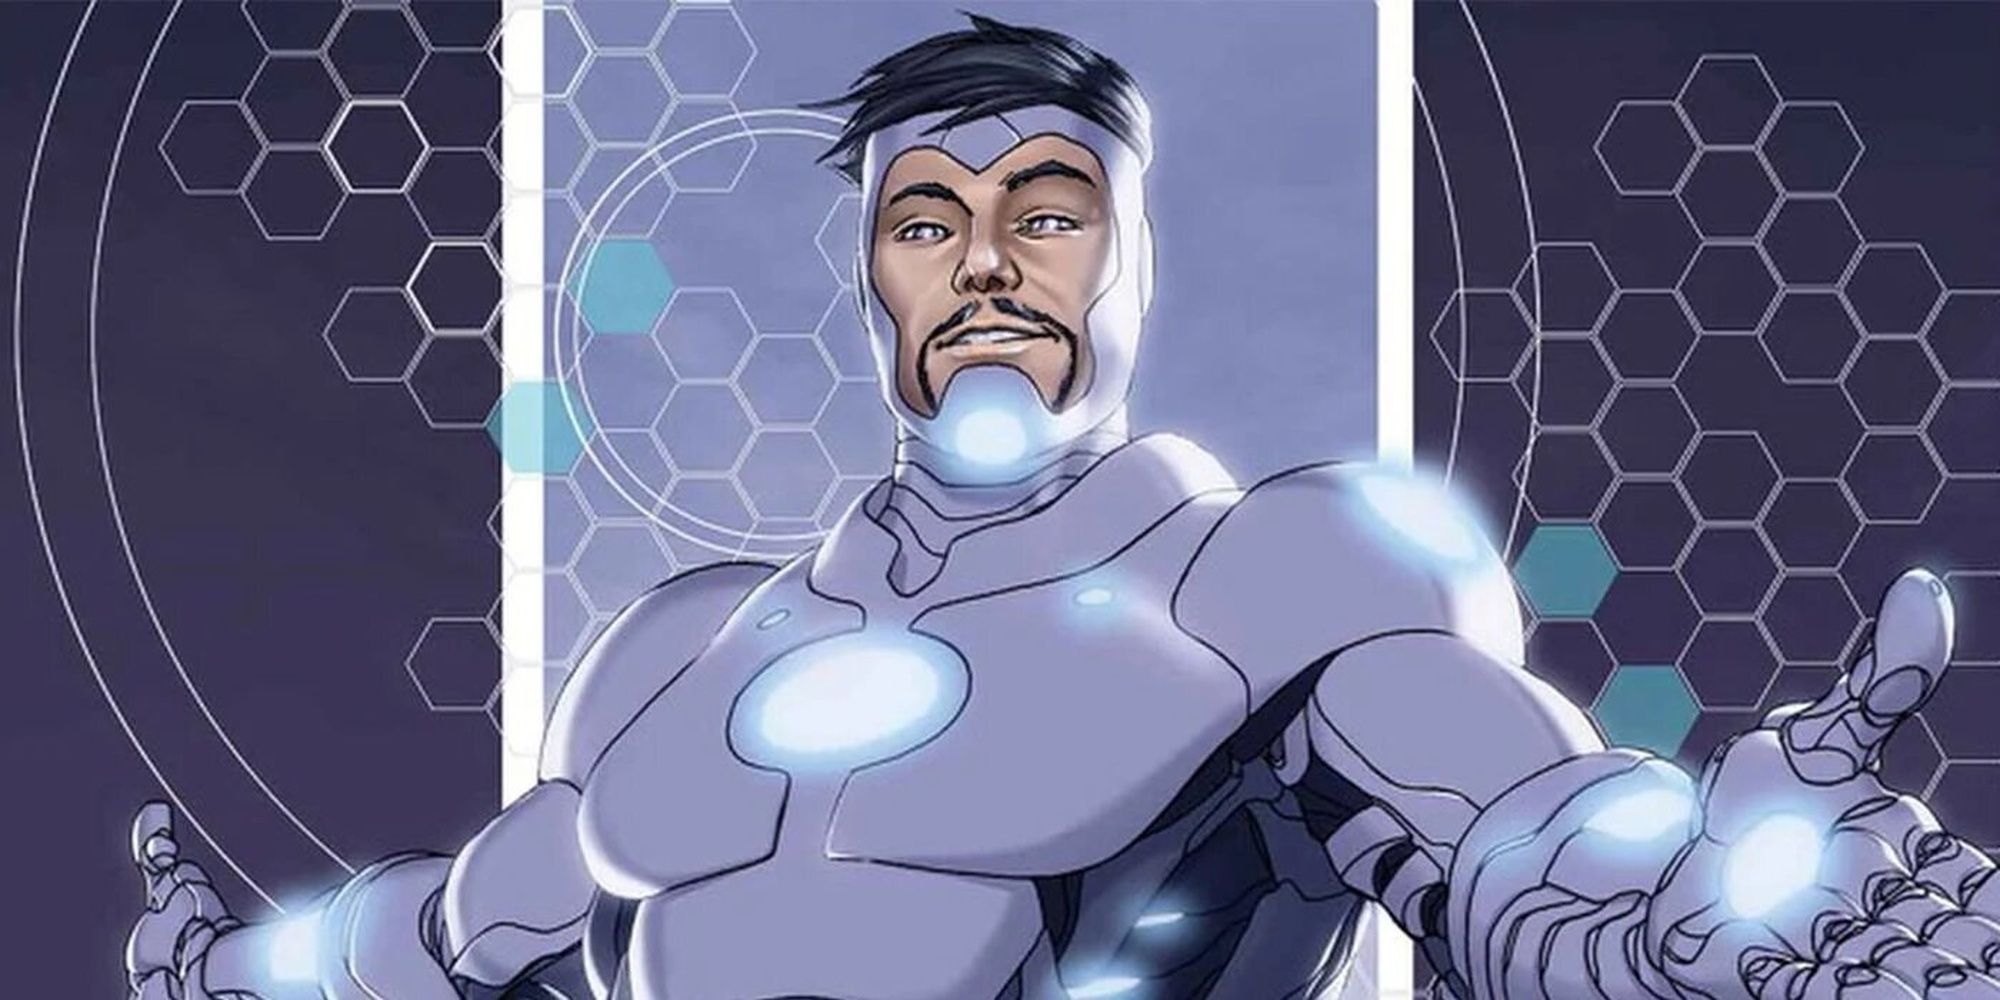 Tony Stark in his Superior Iron Man armor